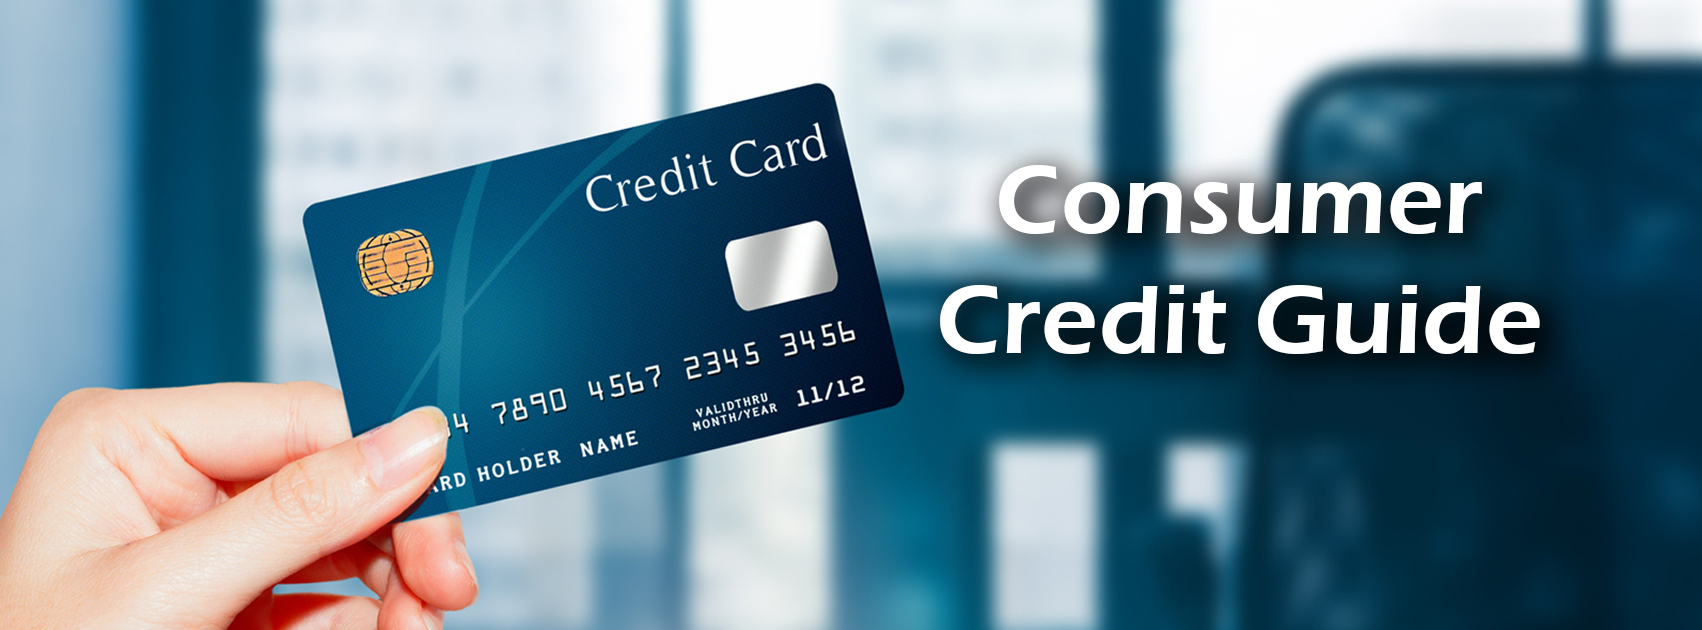 Consumer Credit Guide